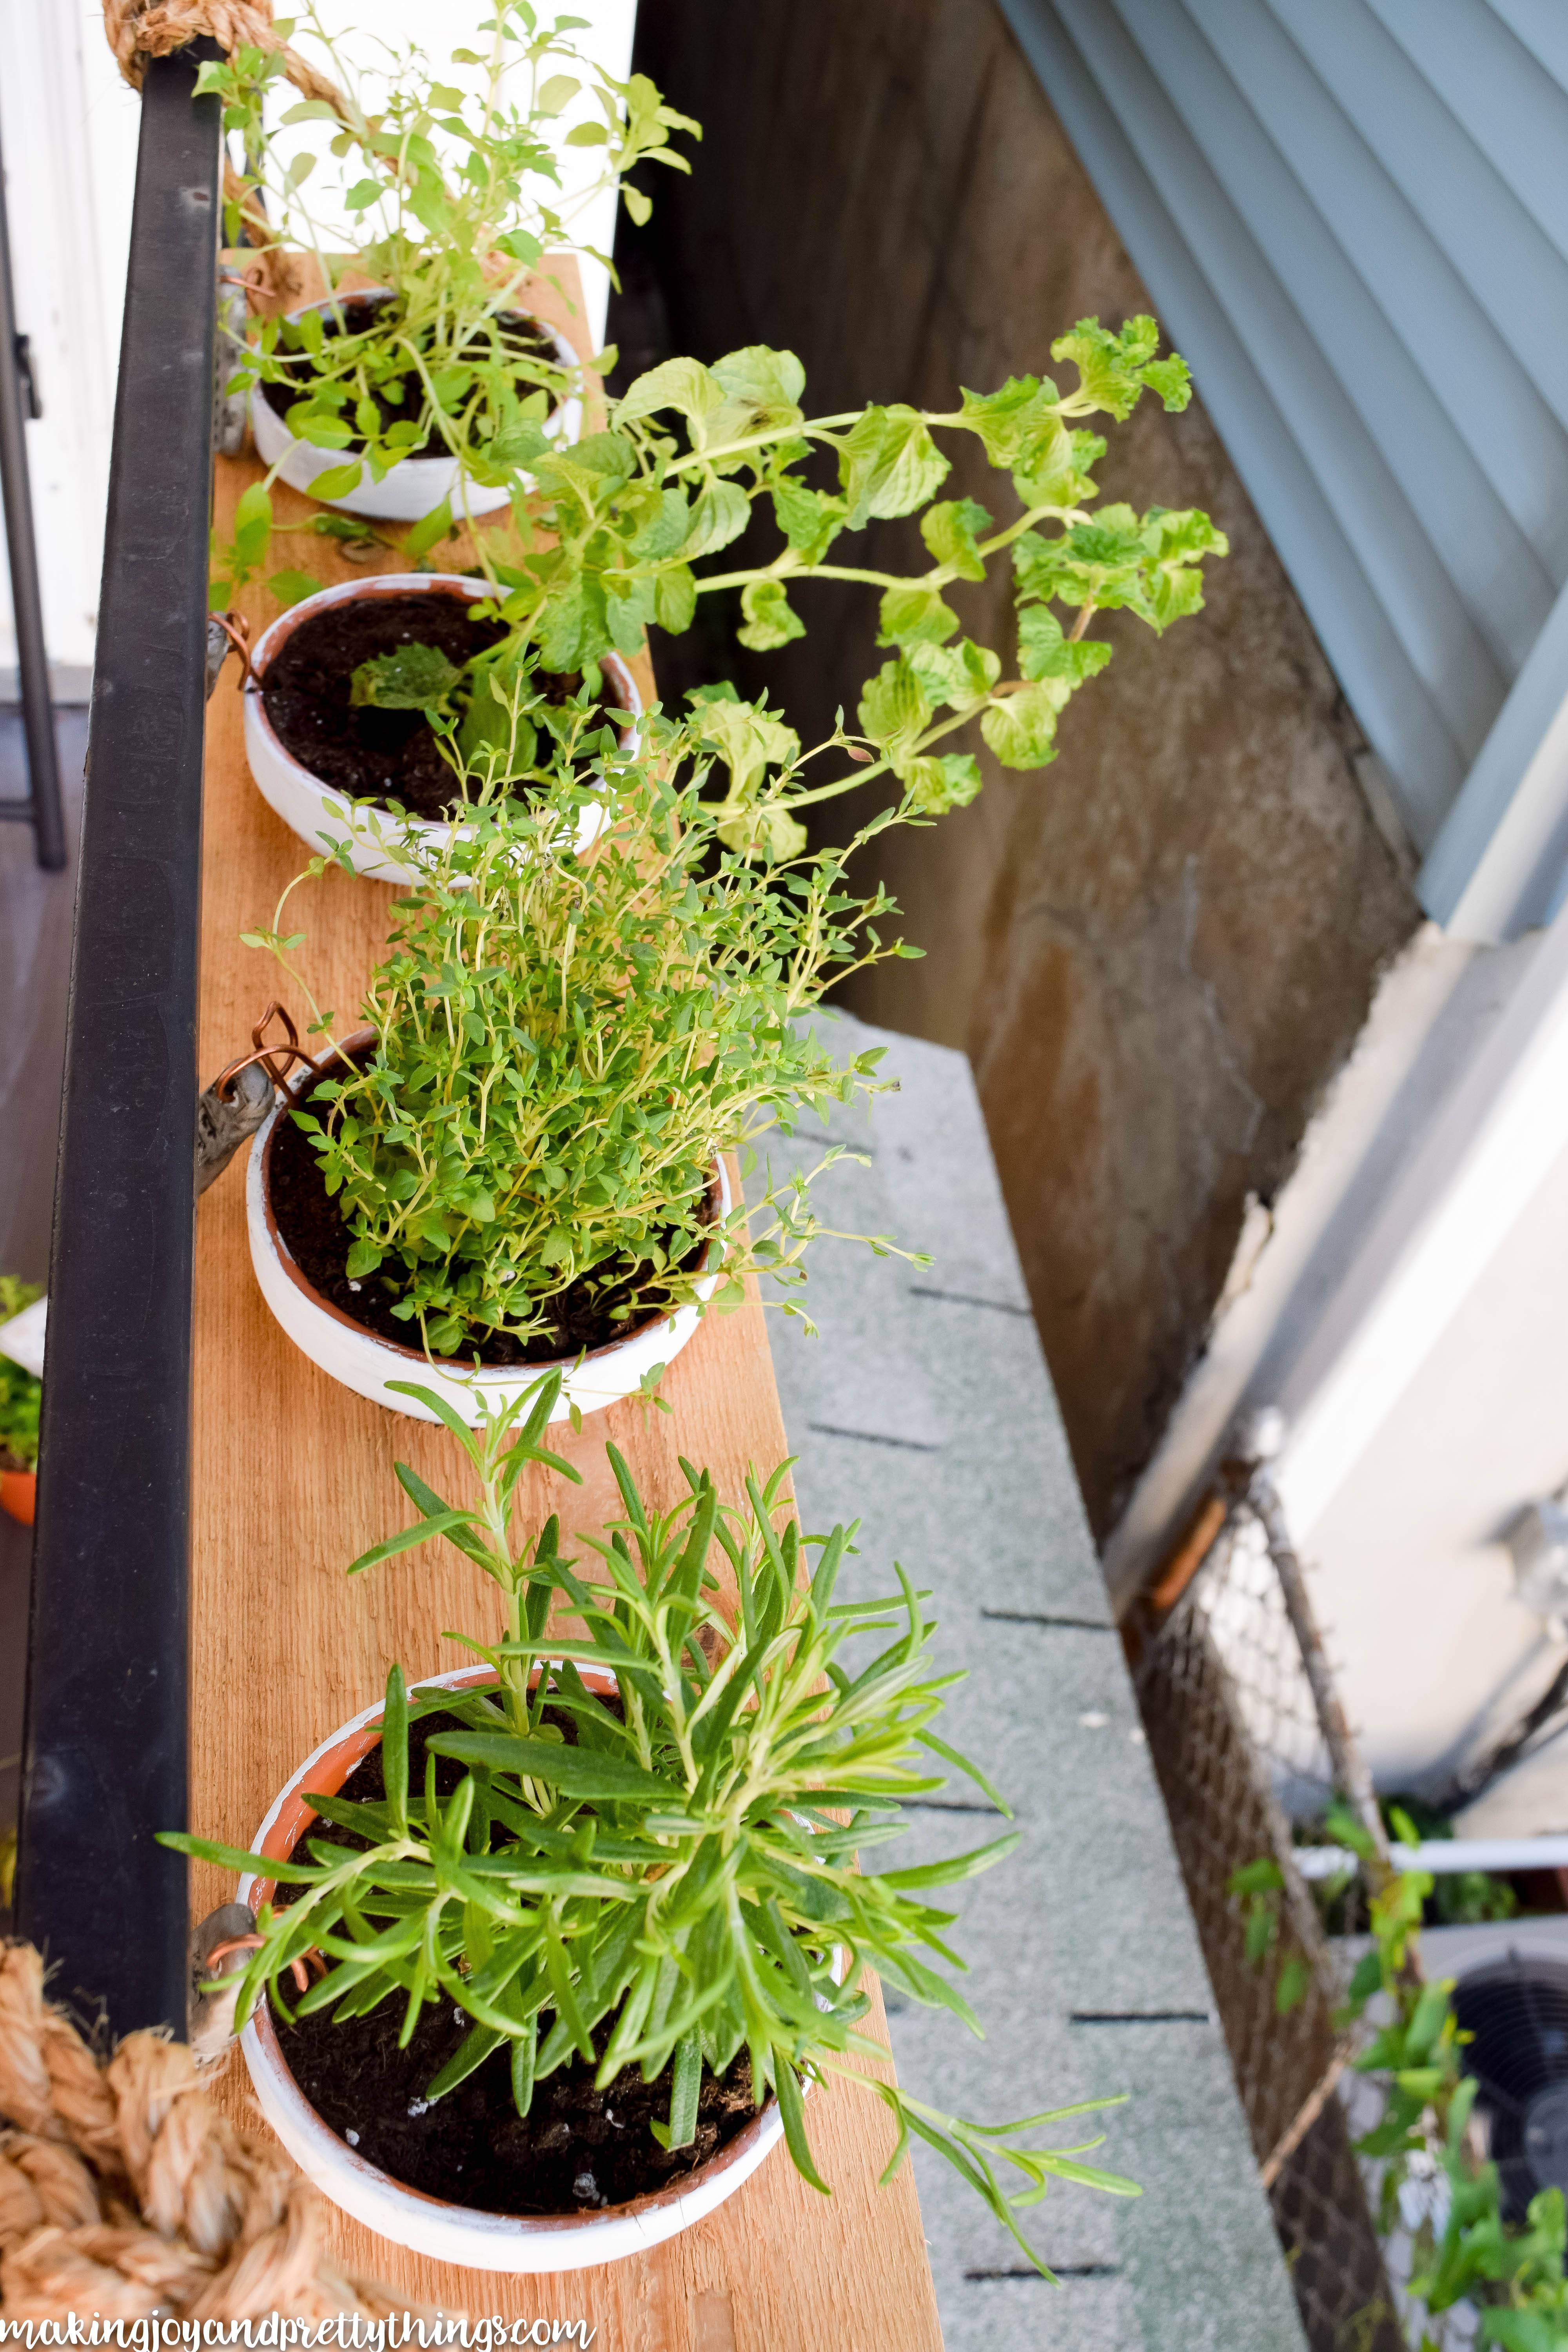 Cool Hanging Herb Garden Ideas